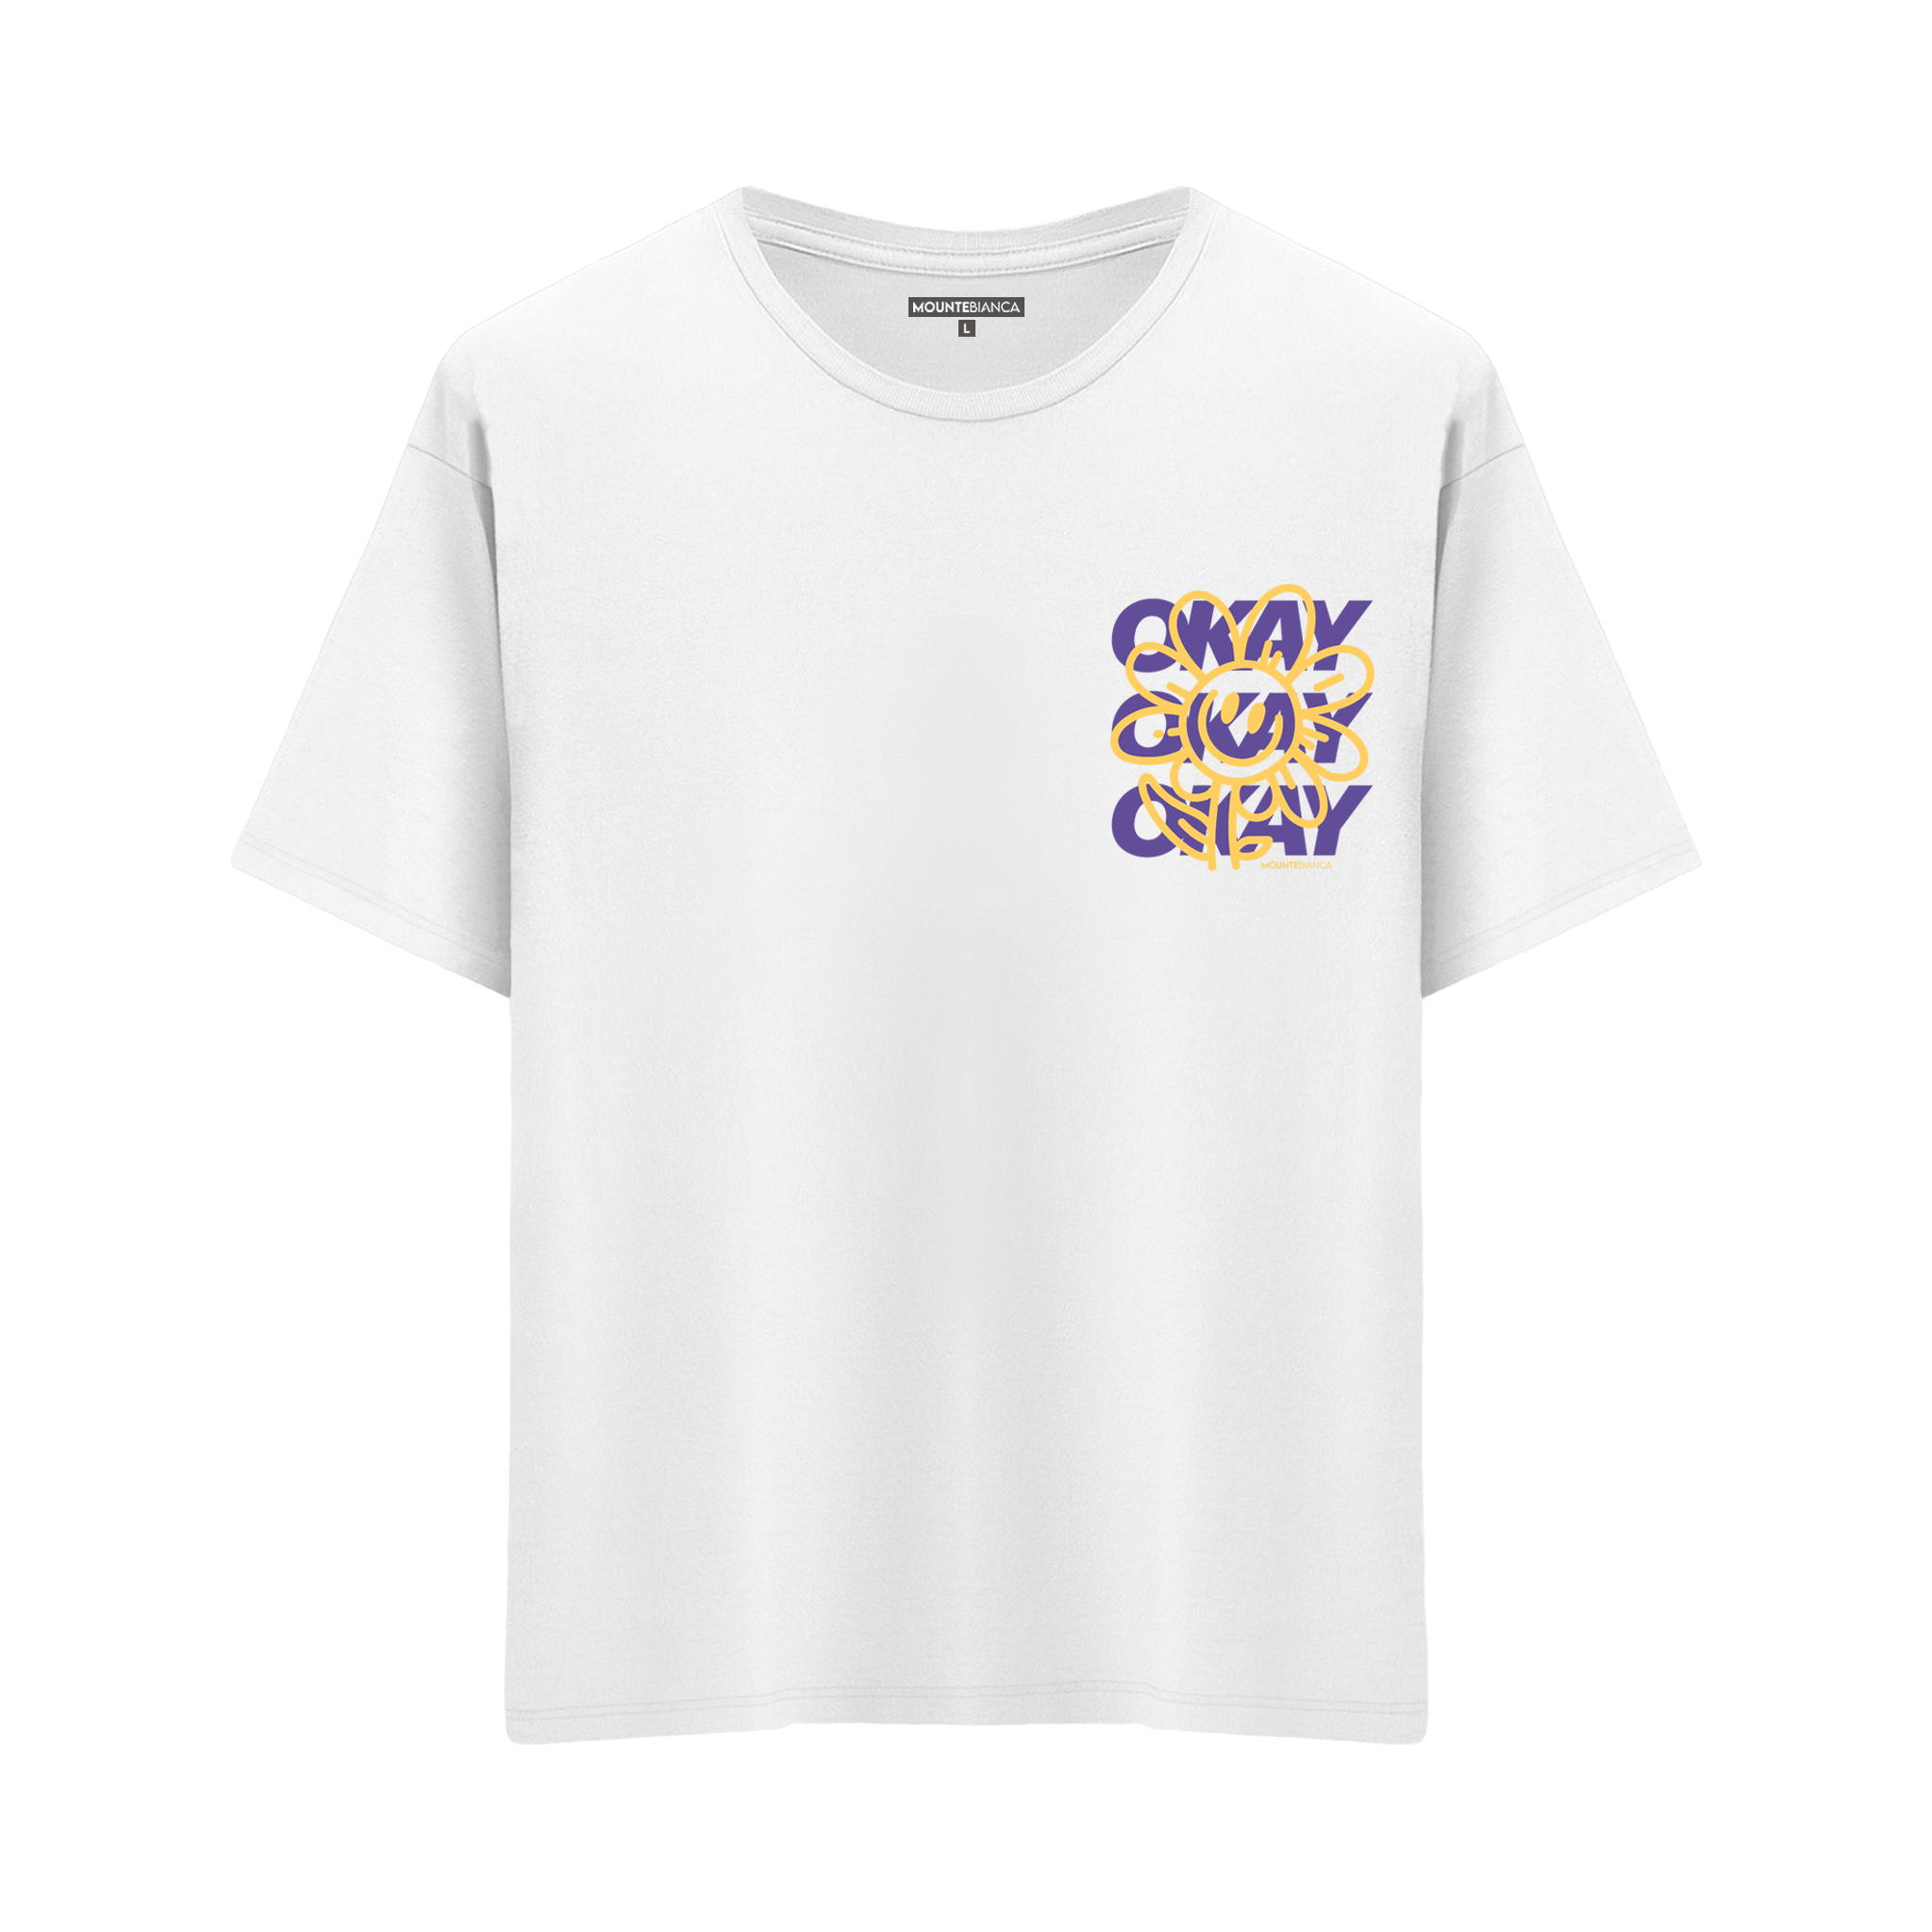 Okay - Oversize T-shirt